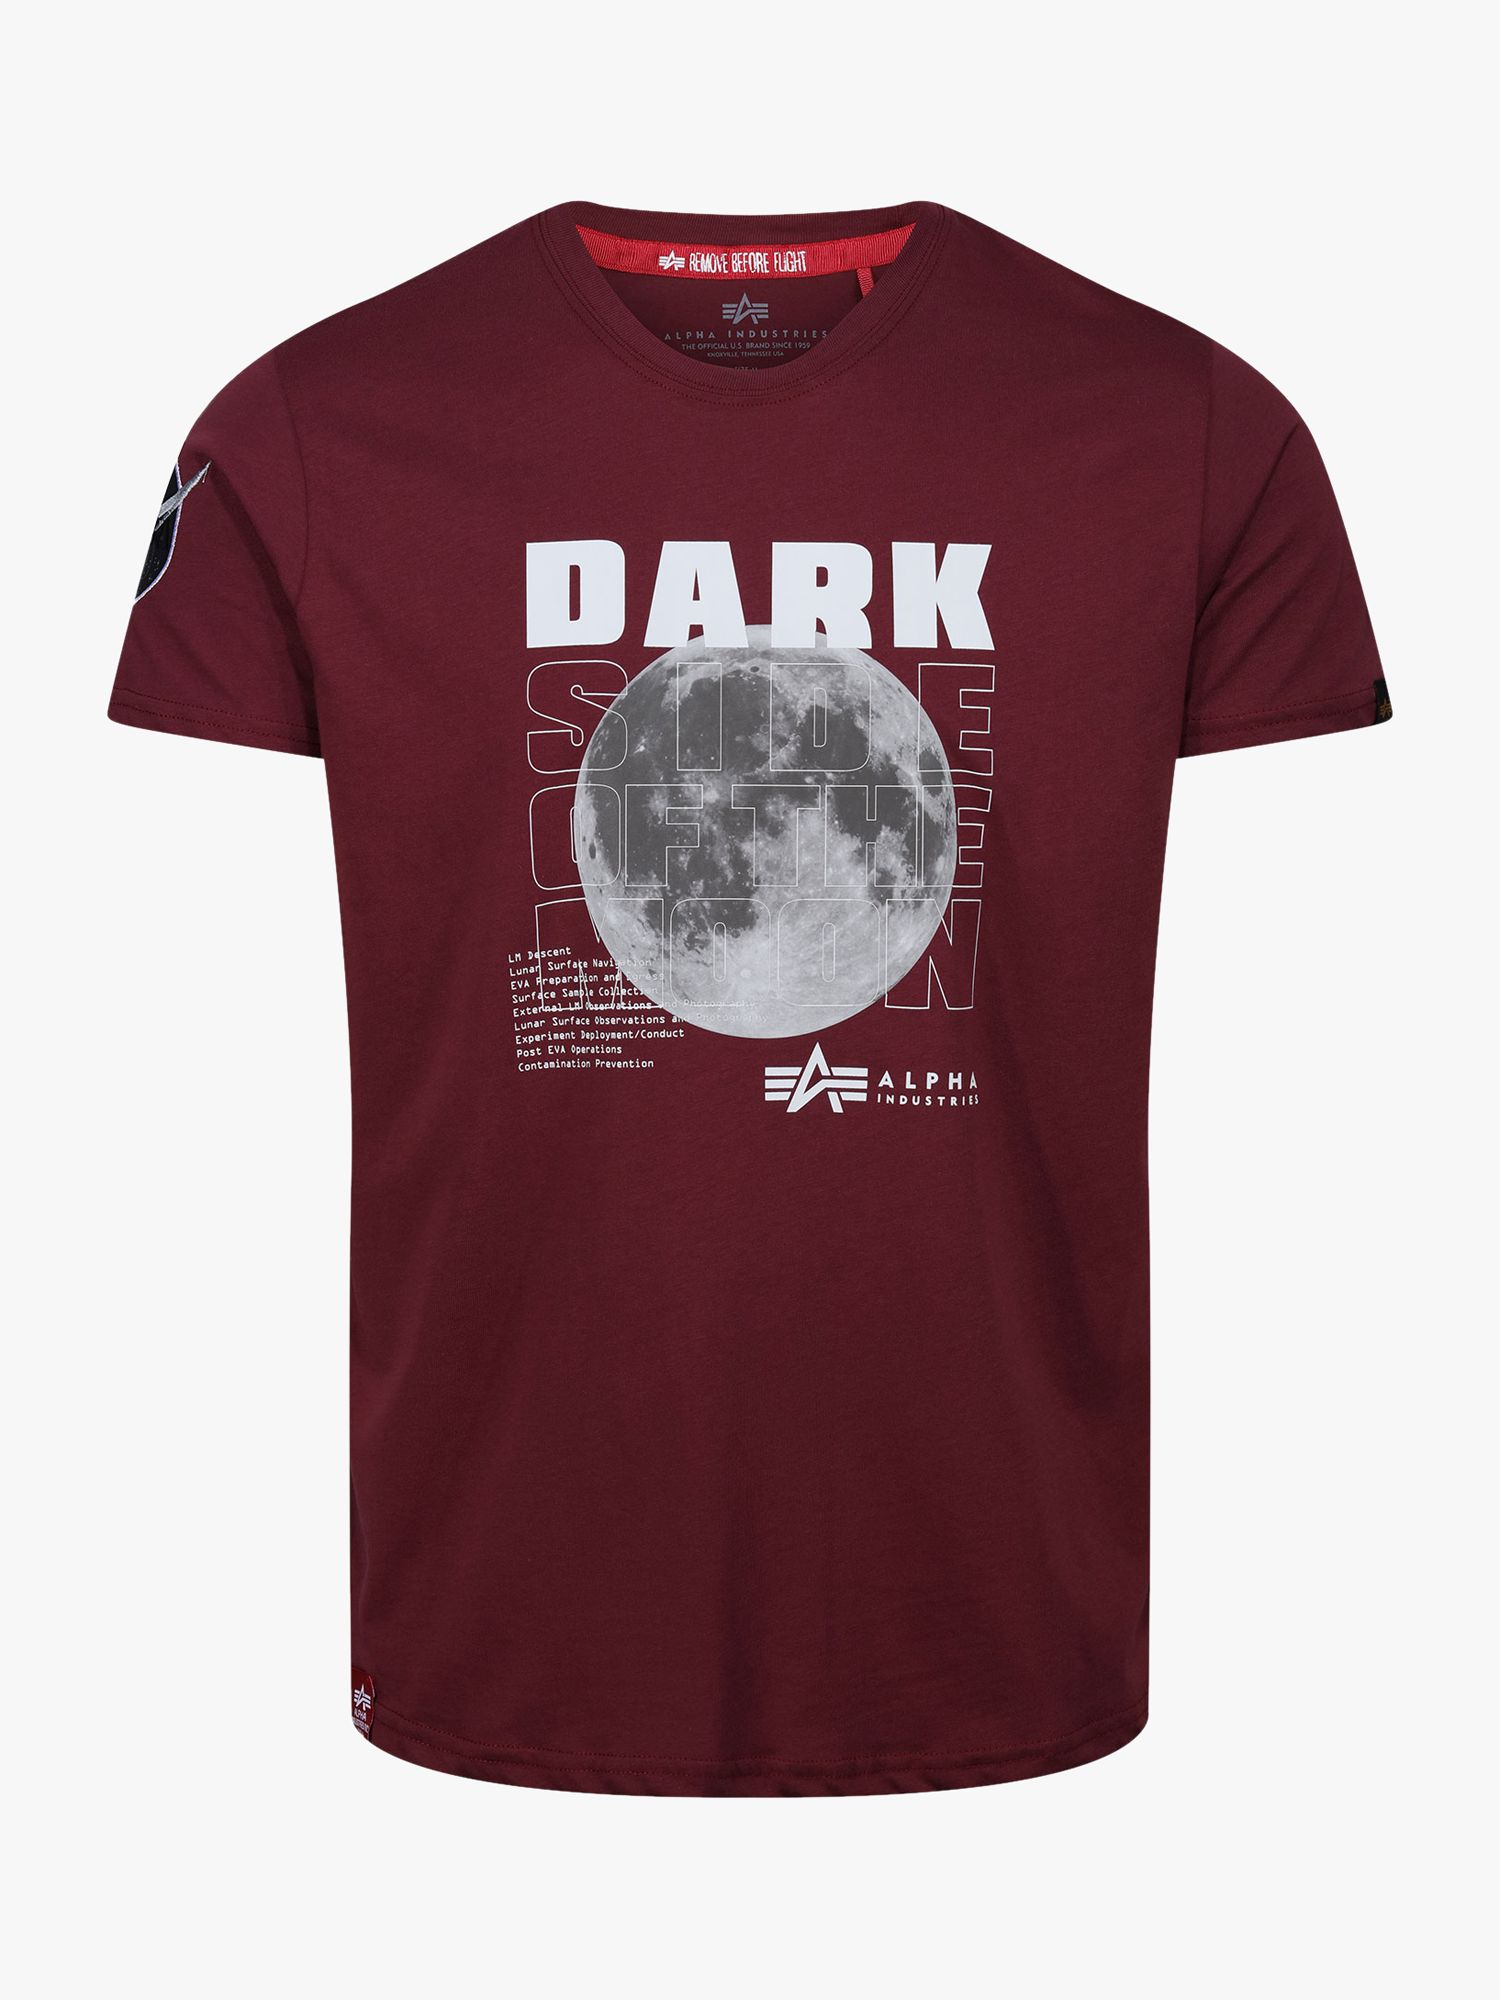 Alpha Industries X Burgundy NASA Lewis Moon John & Partners the Crew Side at Dark of 184 T-Shirt